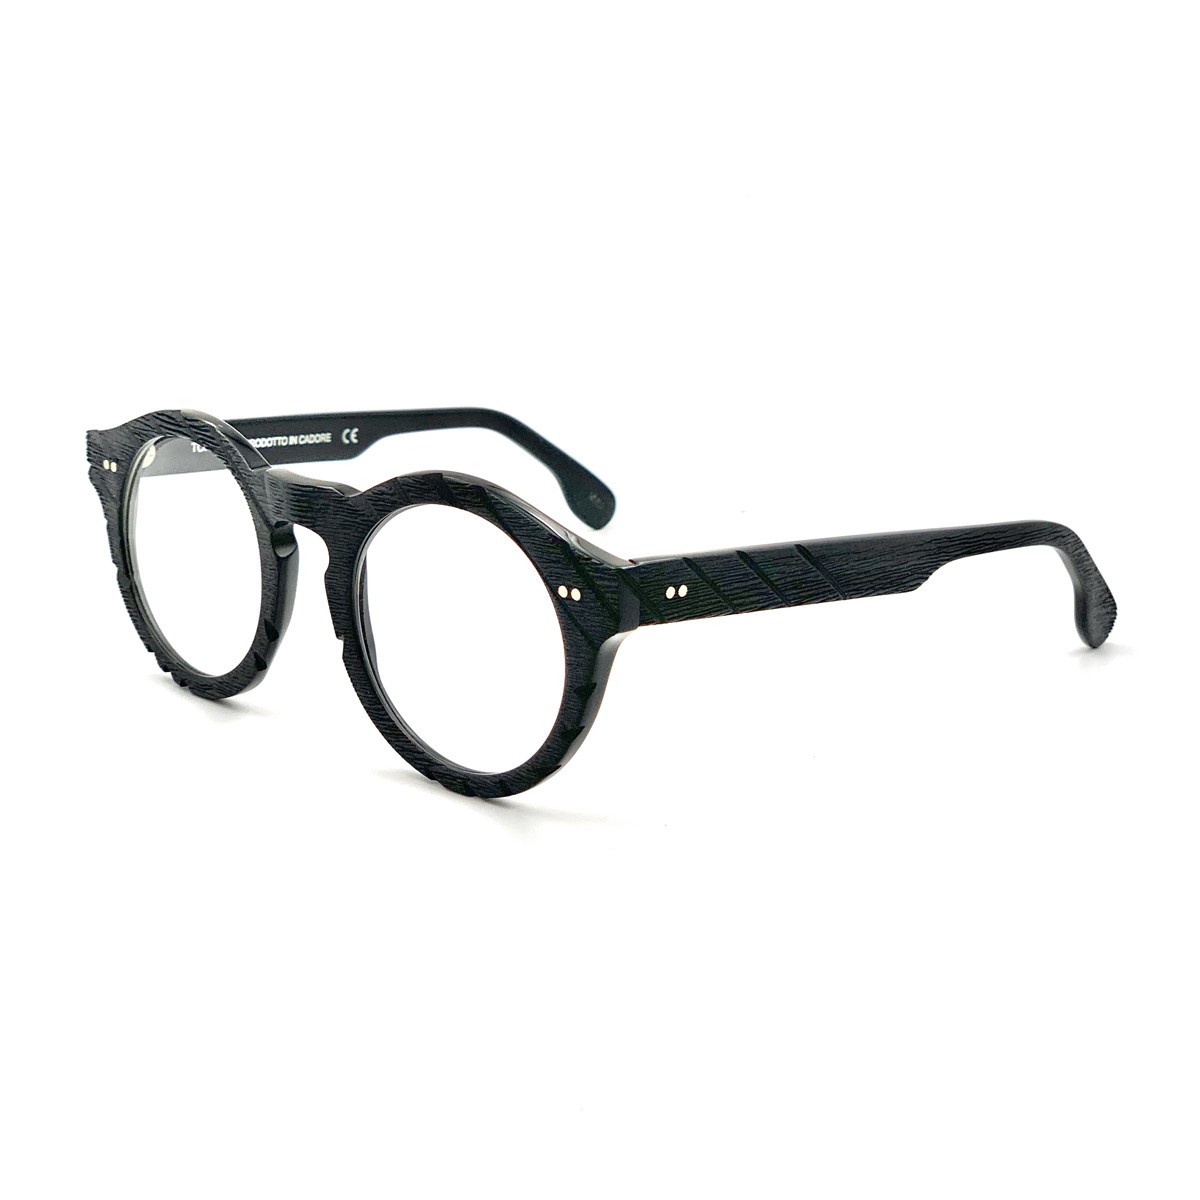 Toffoli Costantino T015 Tracciato 001 | Unisex eyeglasses